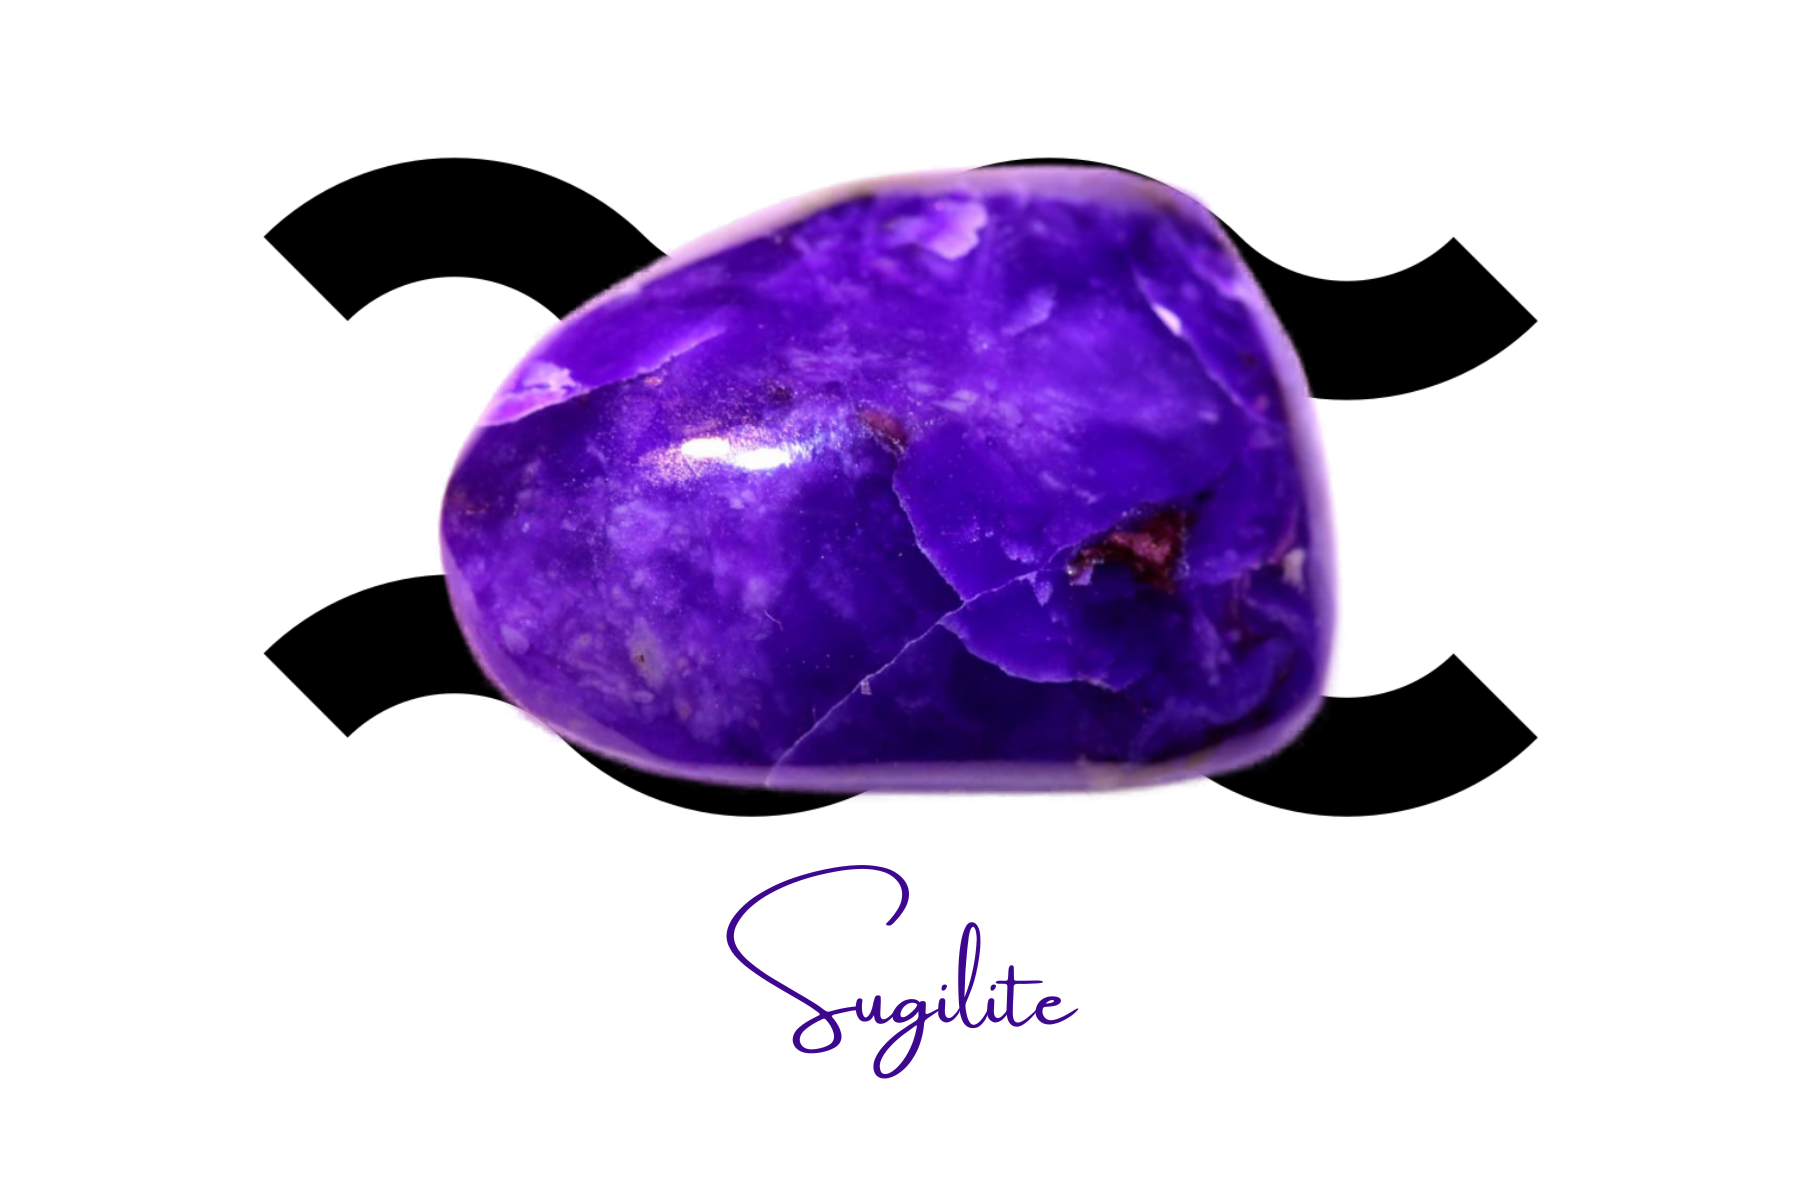 Rock-shaped purple sugilite over the Aquarius sign